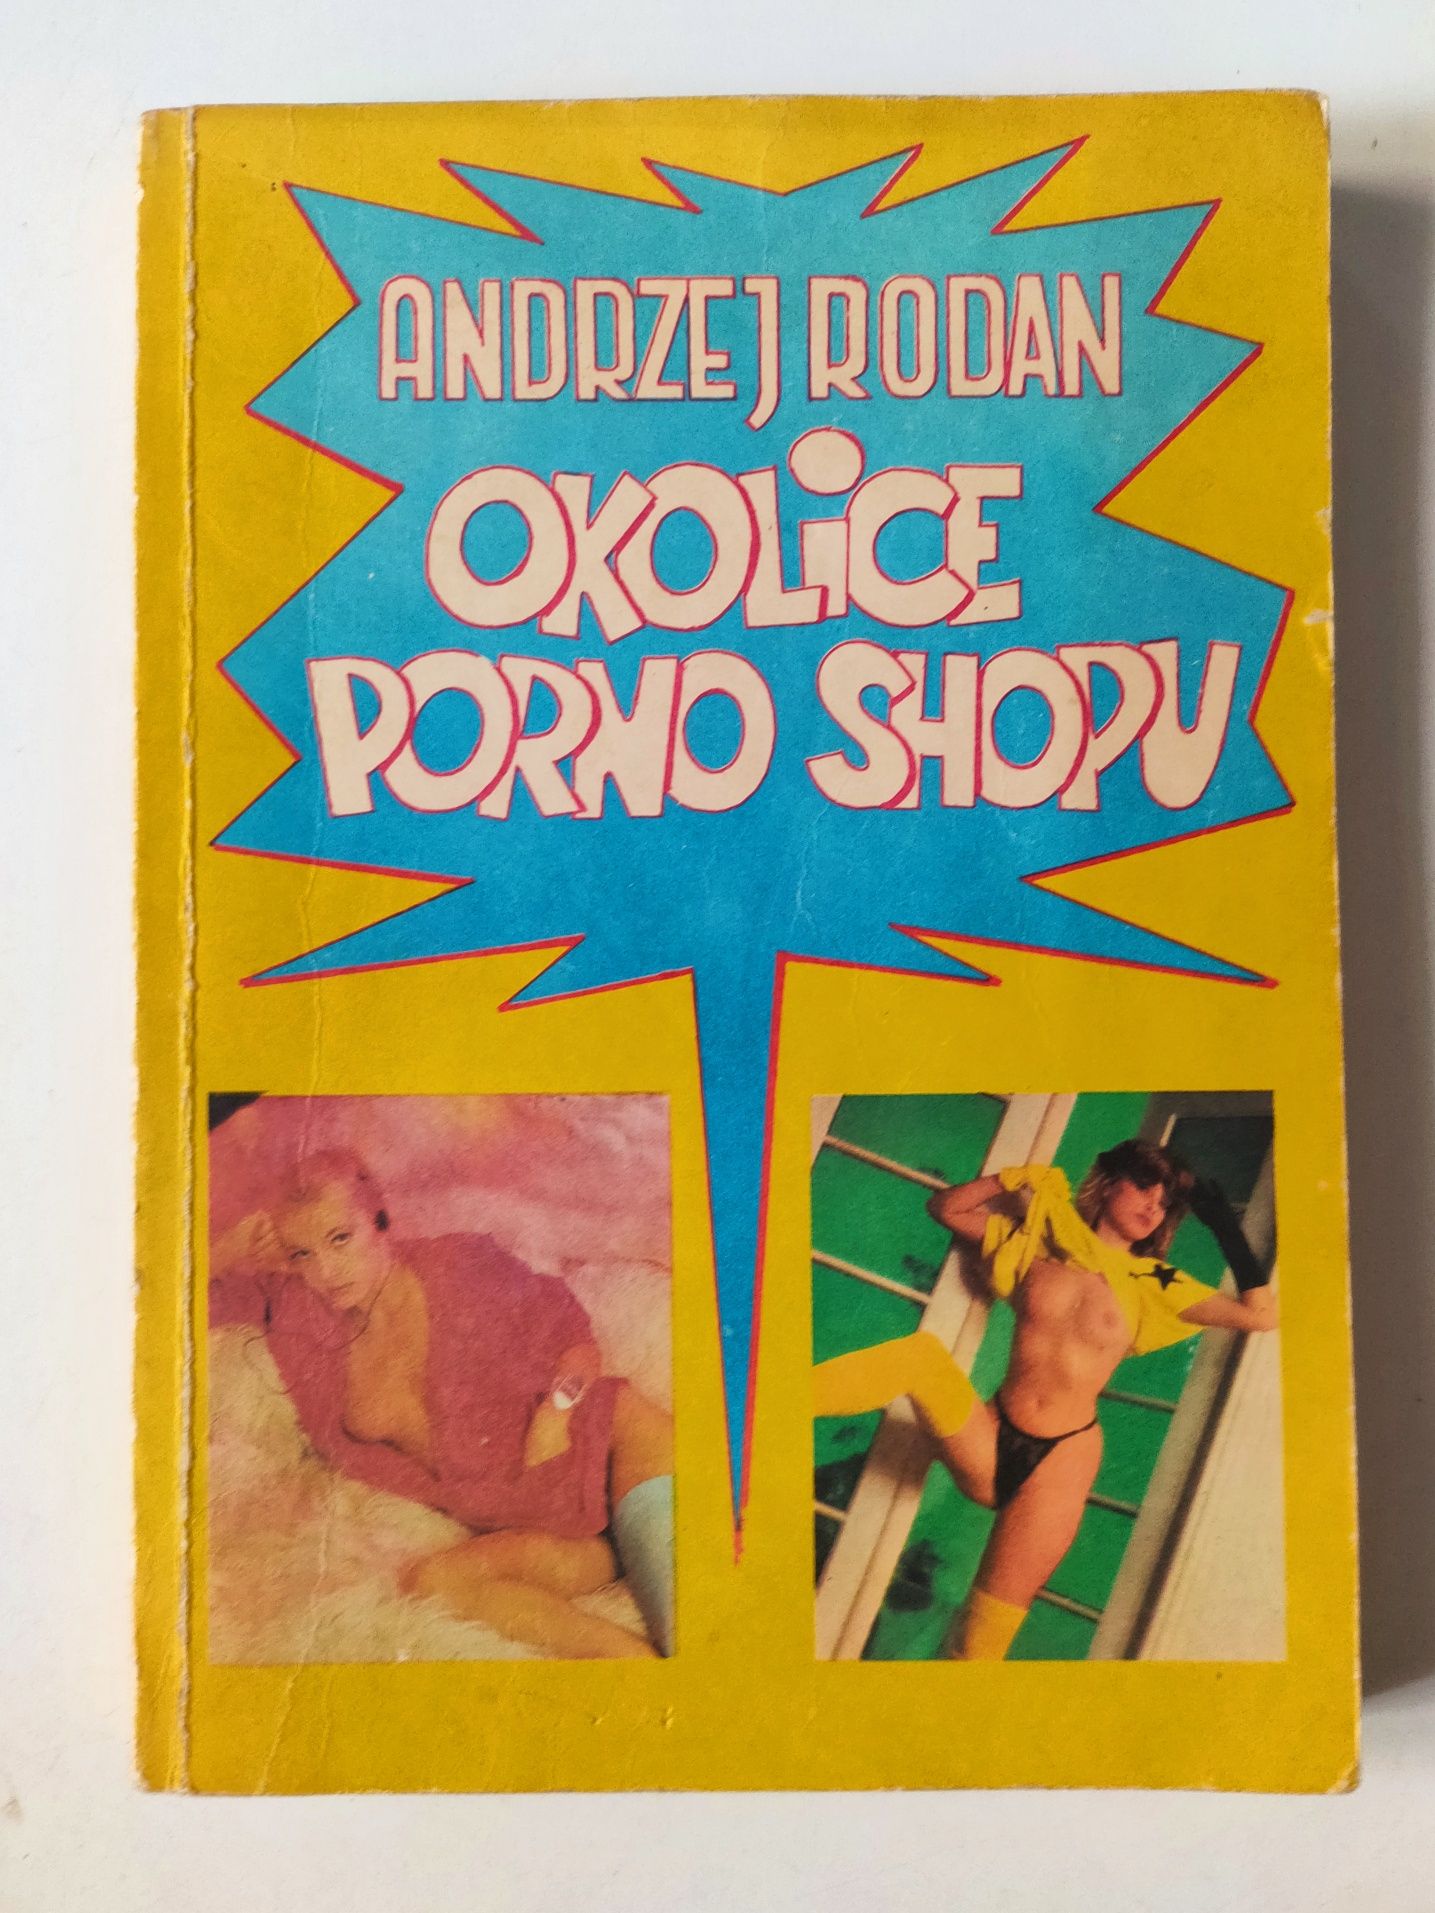 Andrzej Rodan  " okolice porno shopu" PRL
" okolice porno shopu" PRL
"